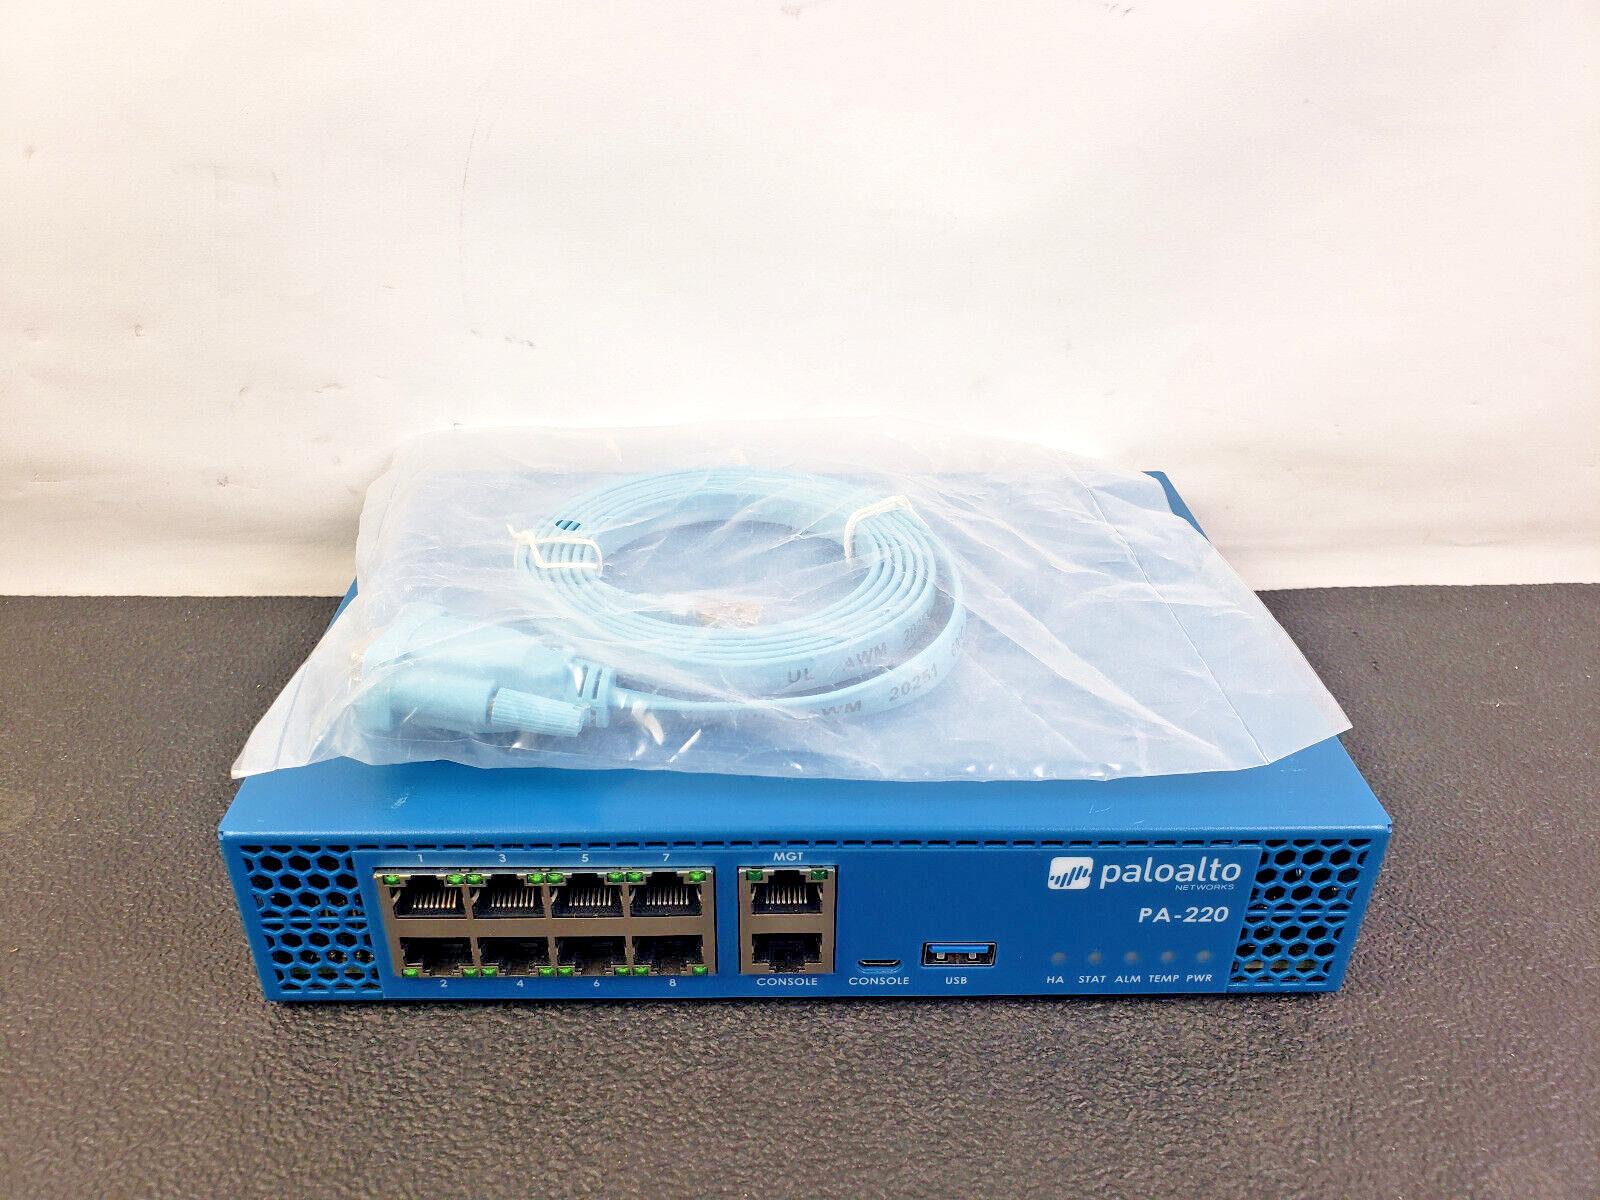 Palo Alto PA-220 Next Gen Firewall Security Appliance No PSU READ